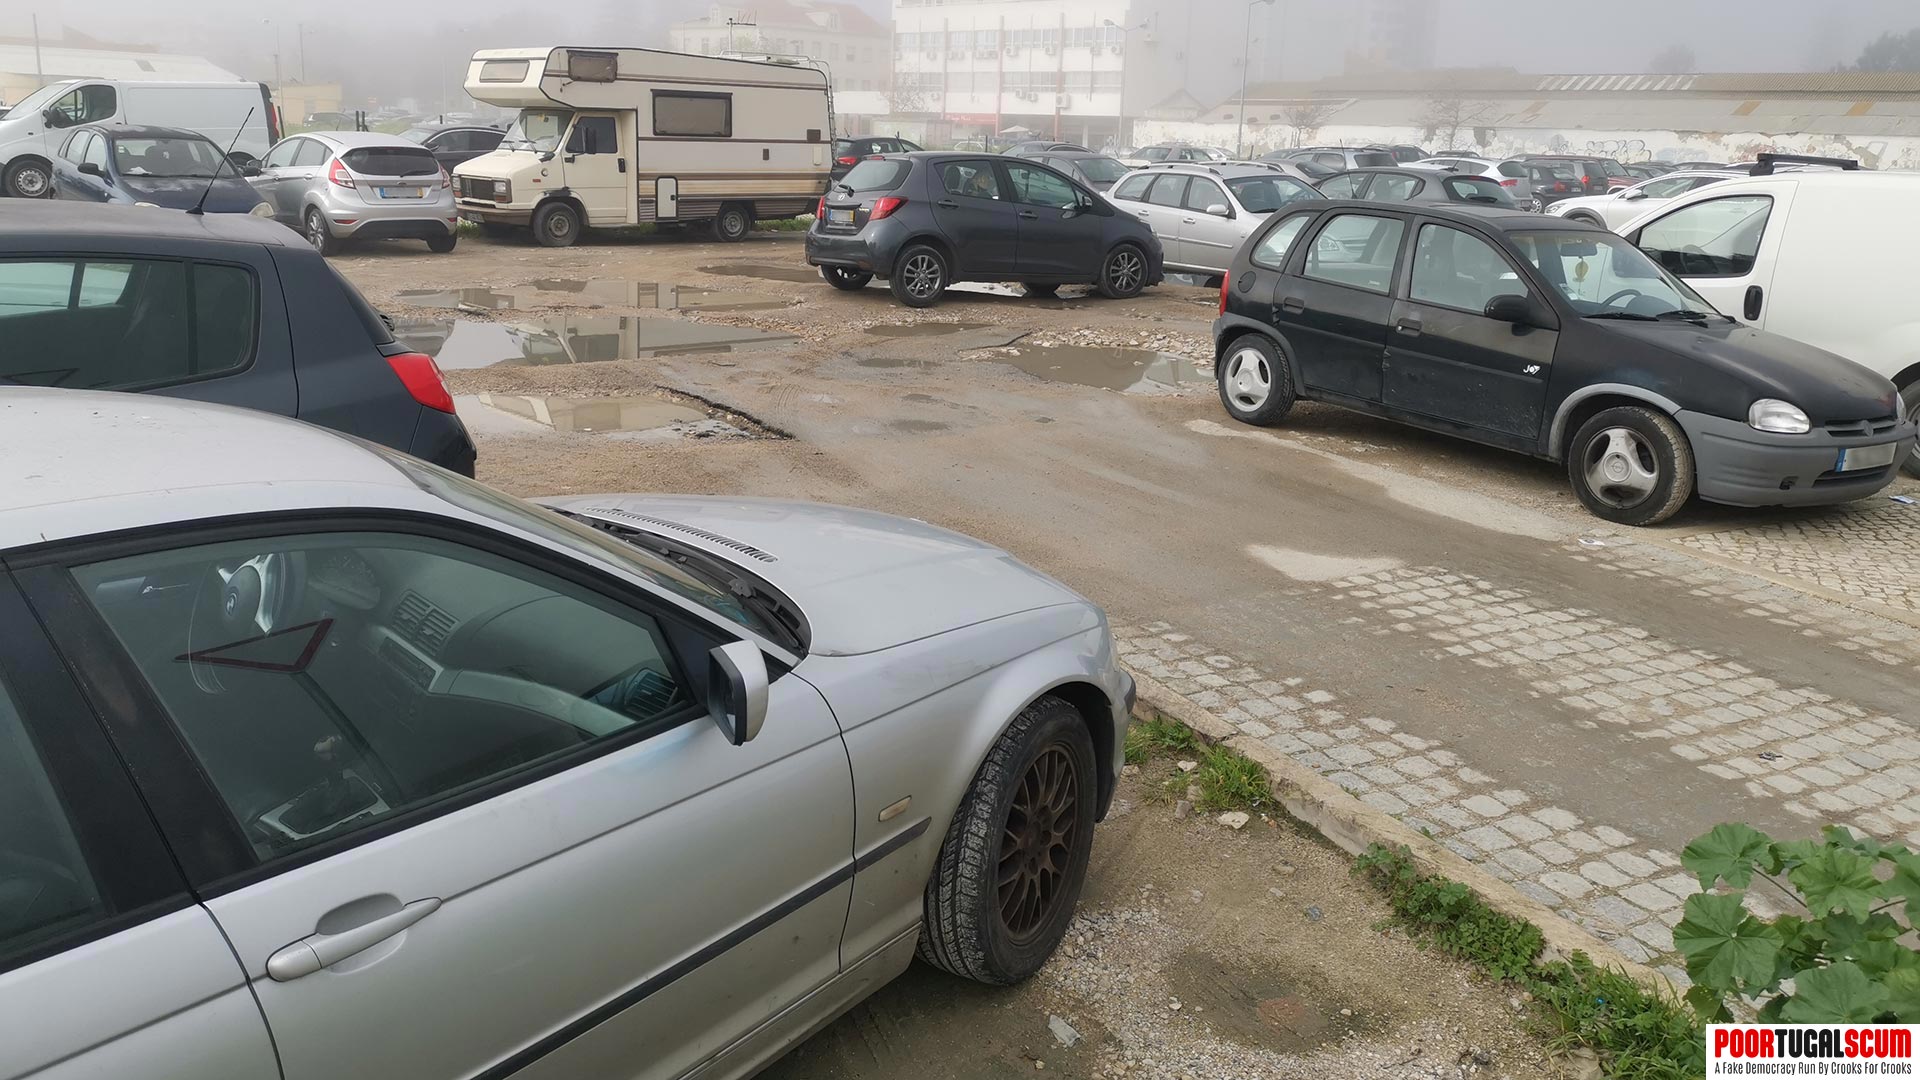 Portuguese car park full of decrepit cars